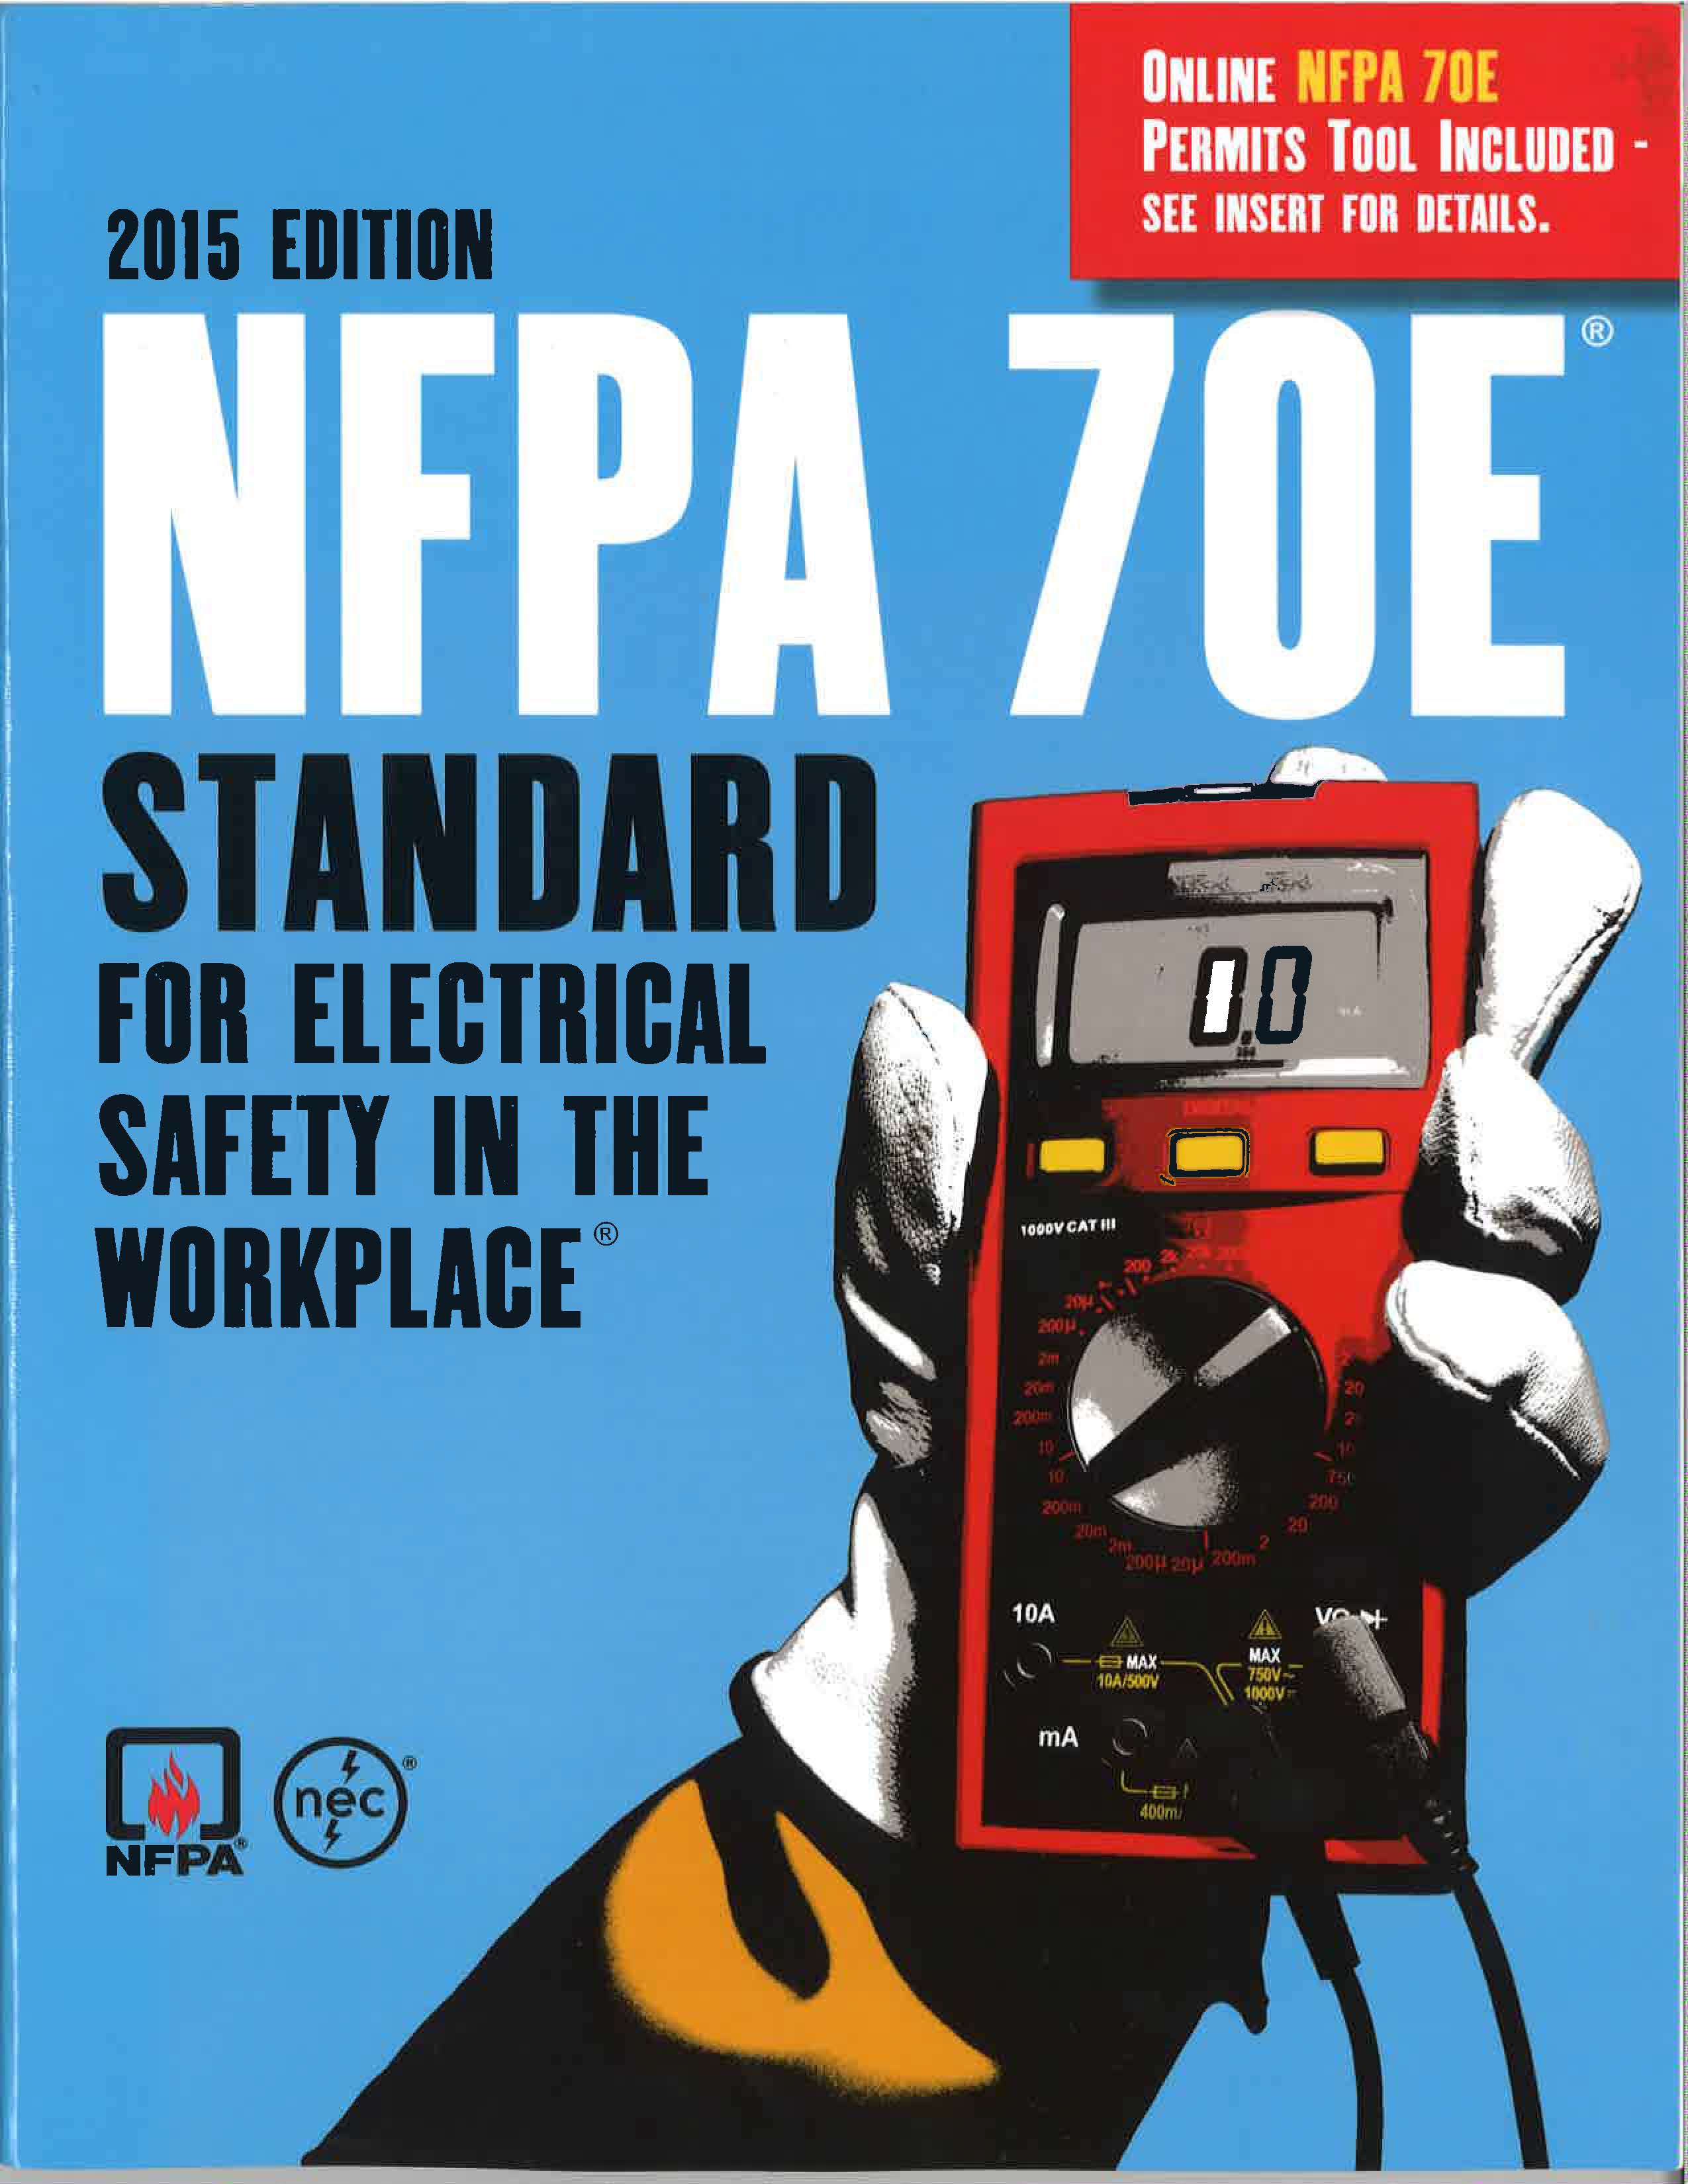 OSHA Standards & NFPA 70E Regulation Changes